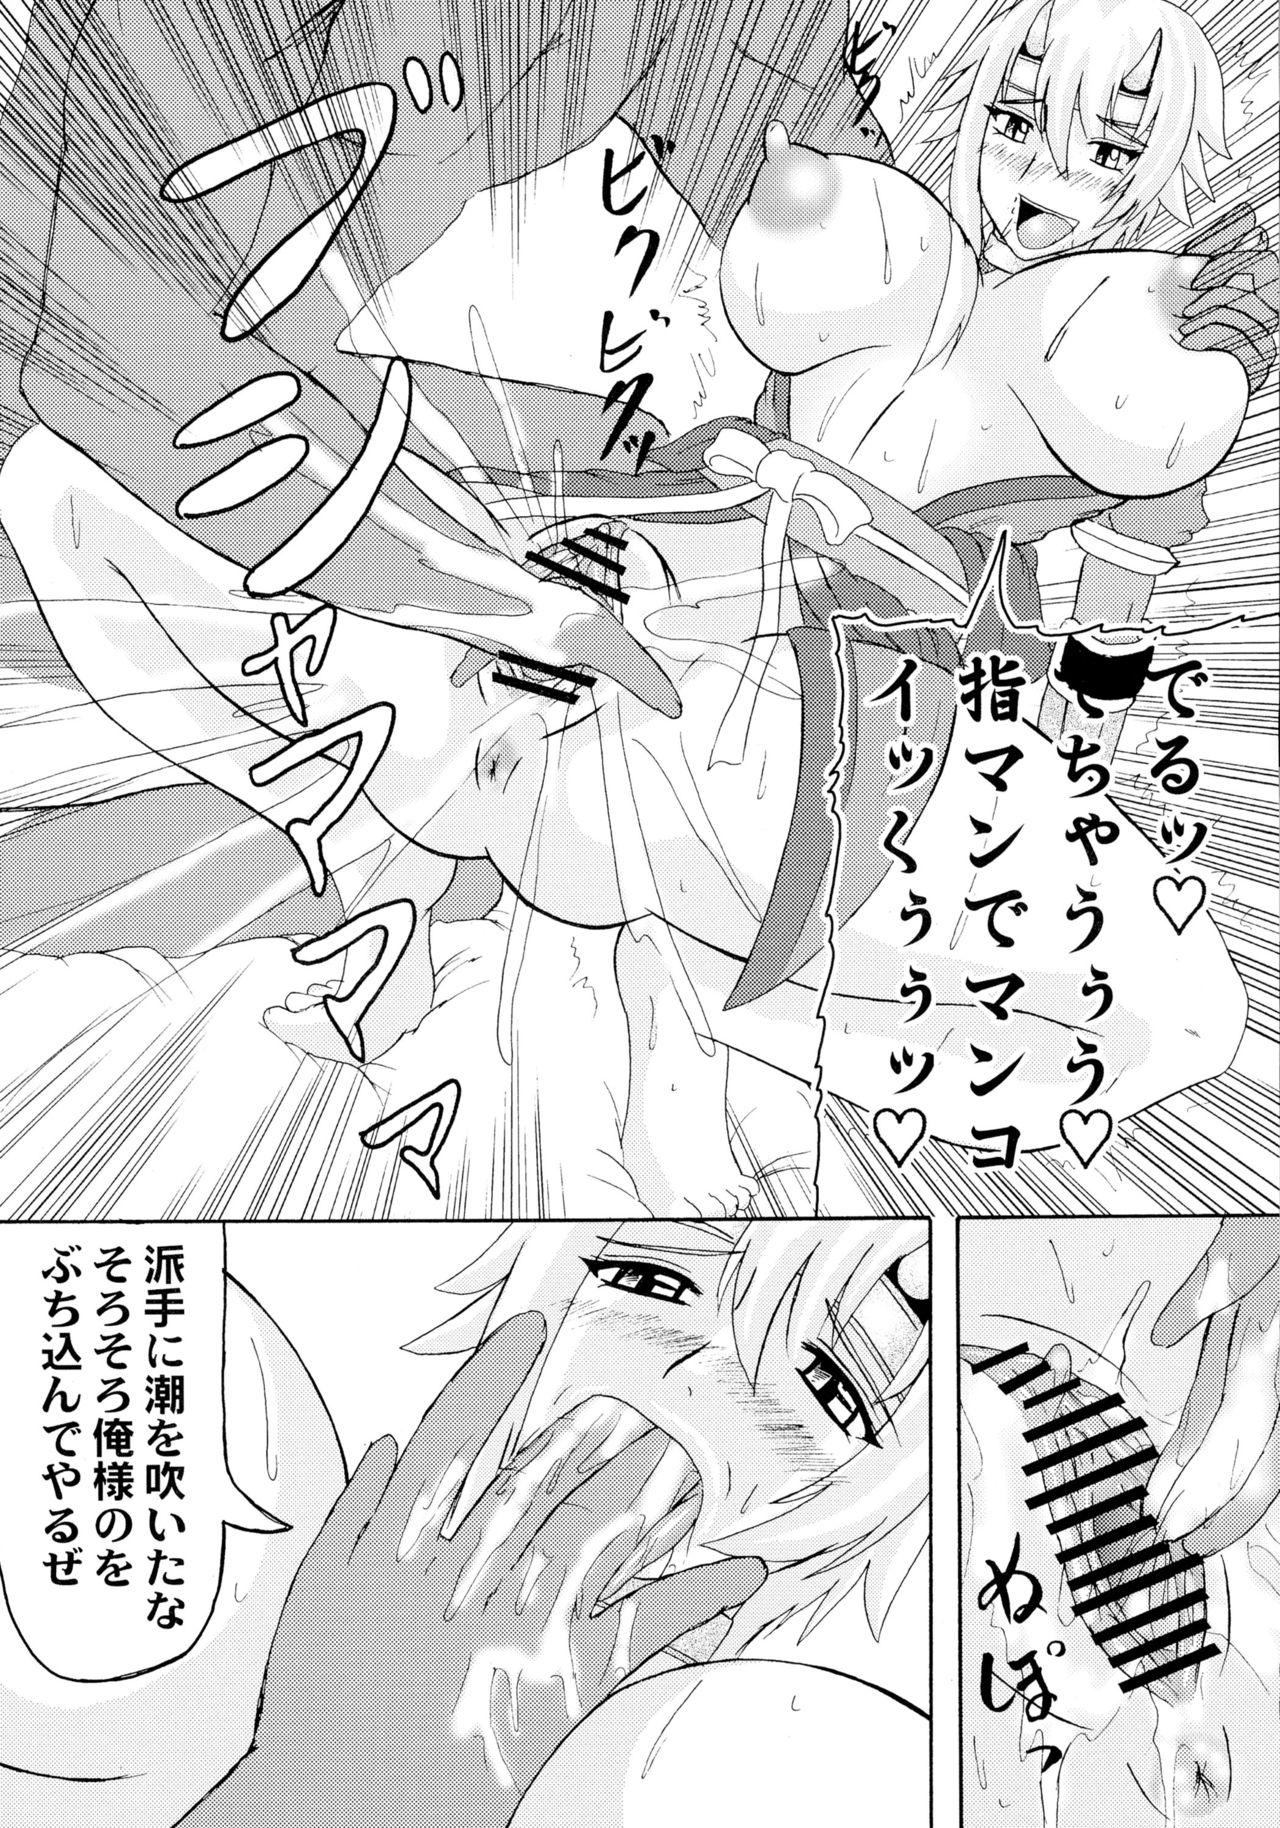 Sweet Kyoufu no 14 e Ike - Queens blade Cocksuckers - Page 8